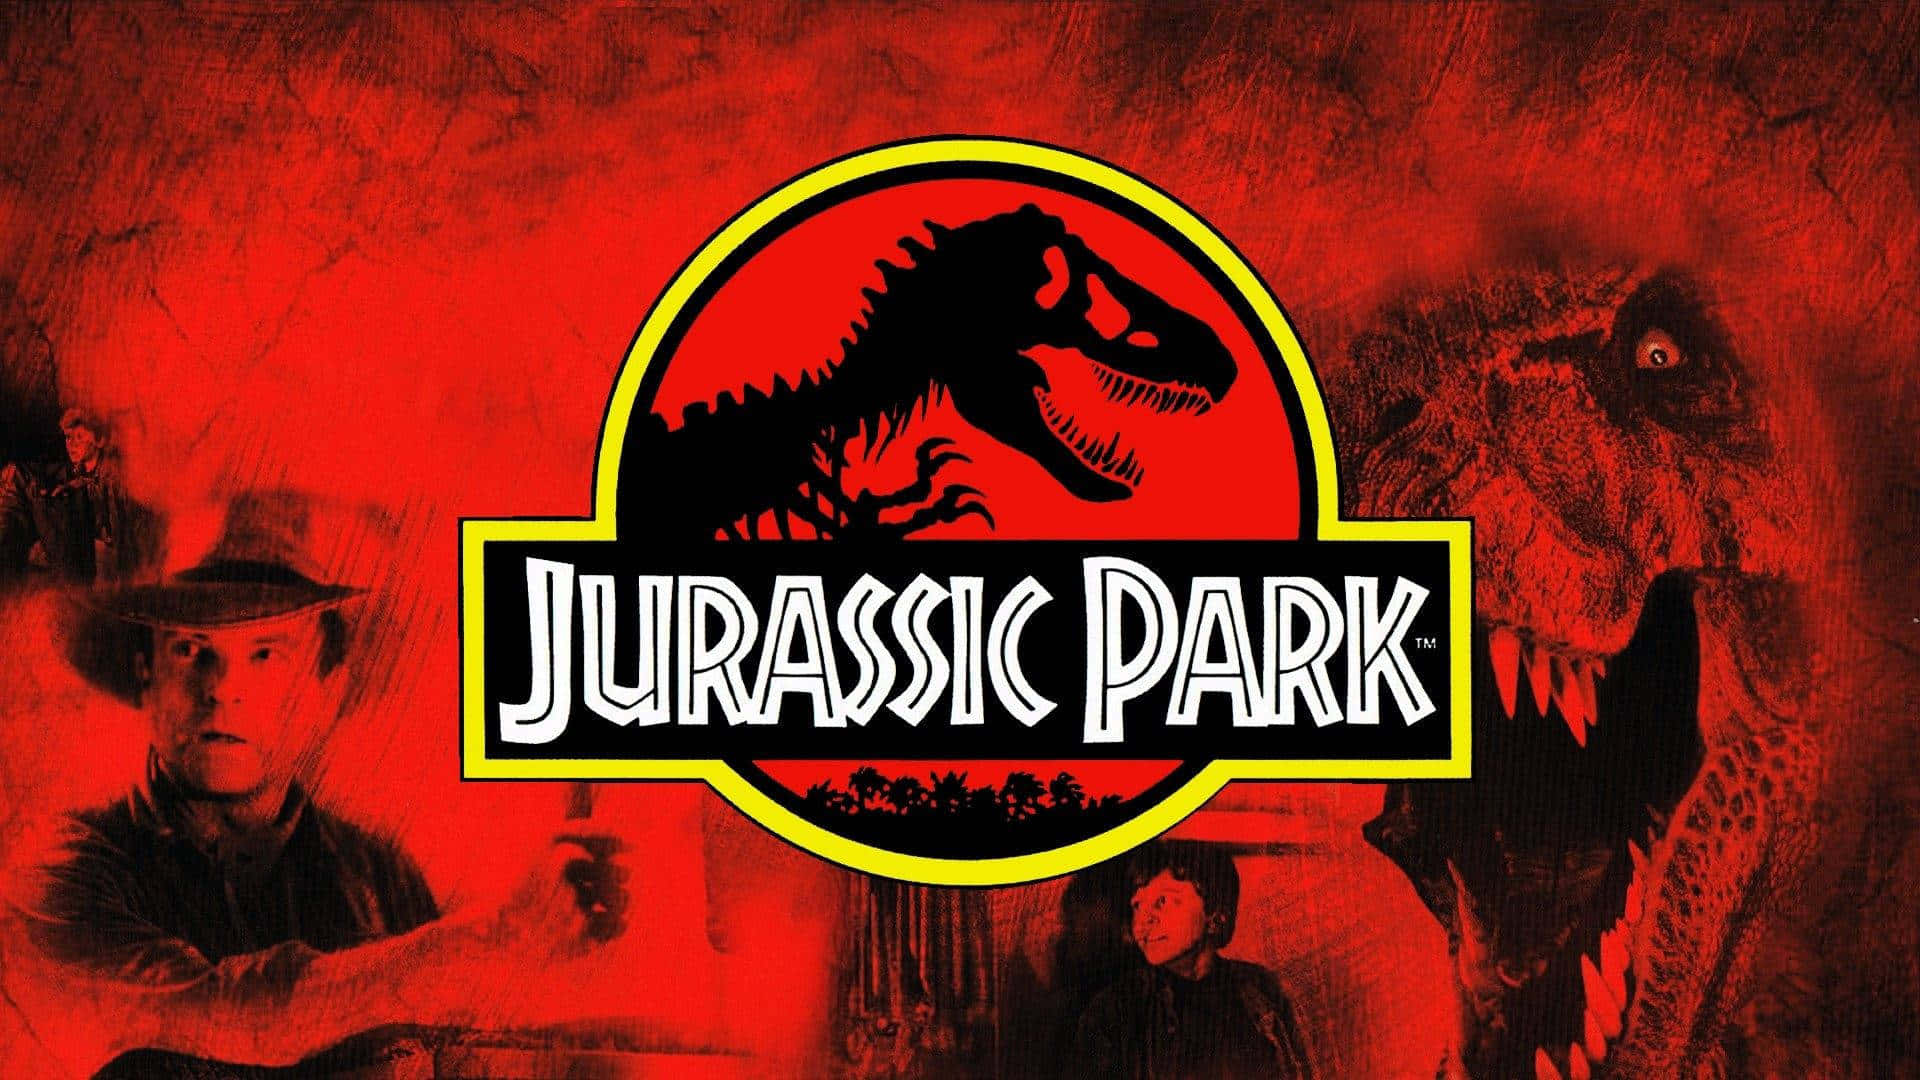 Willkommenim Jurassic Park